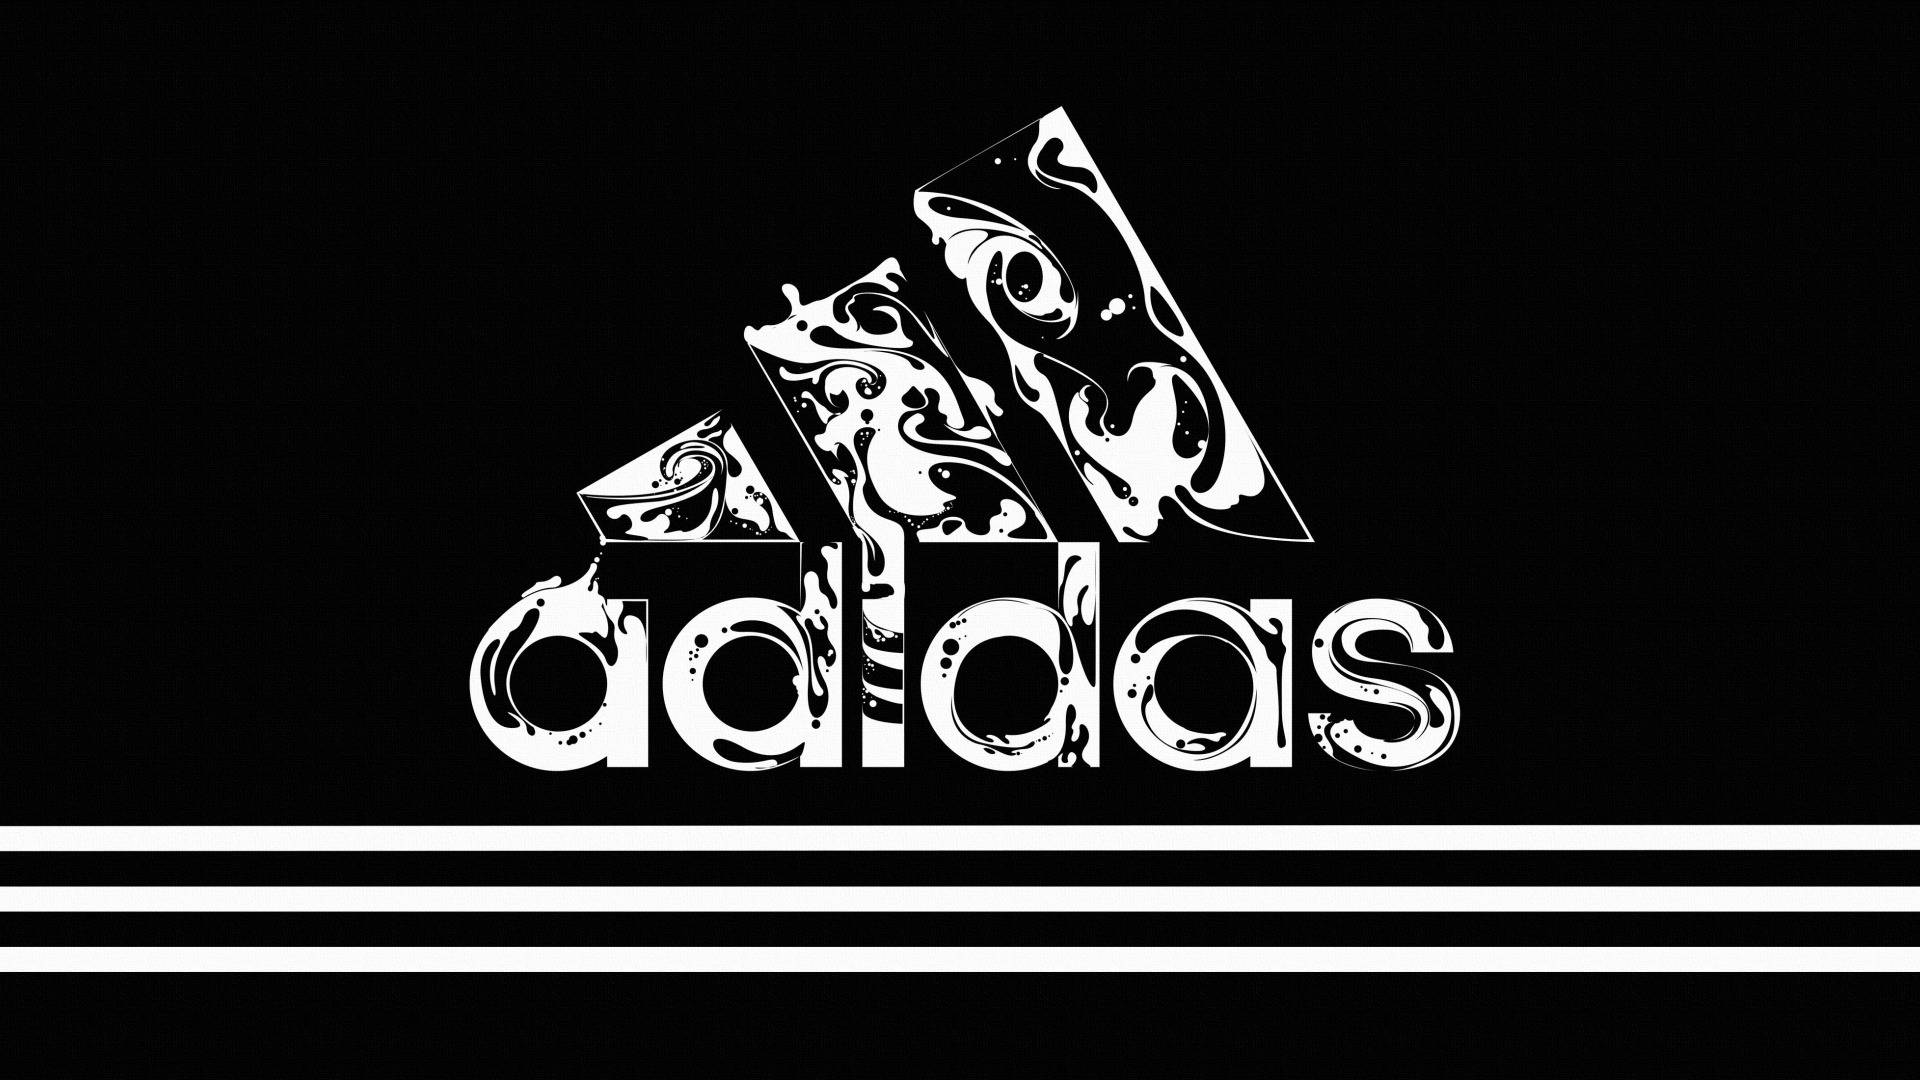 Aquatic Inspired Adidas Logo